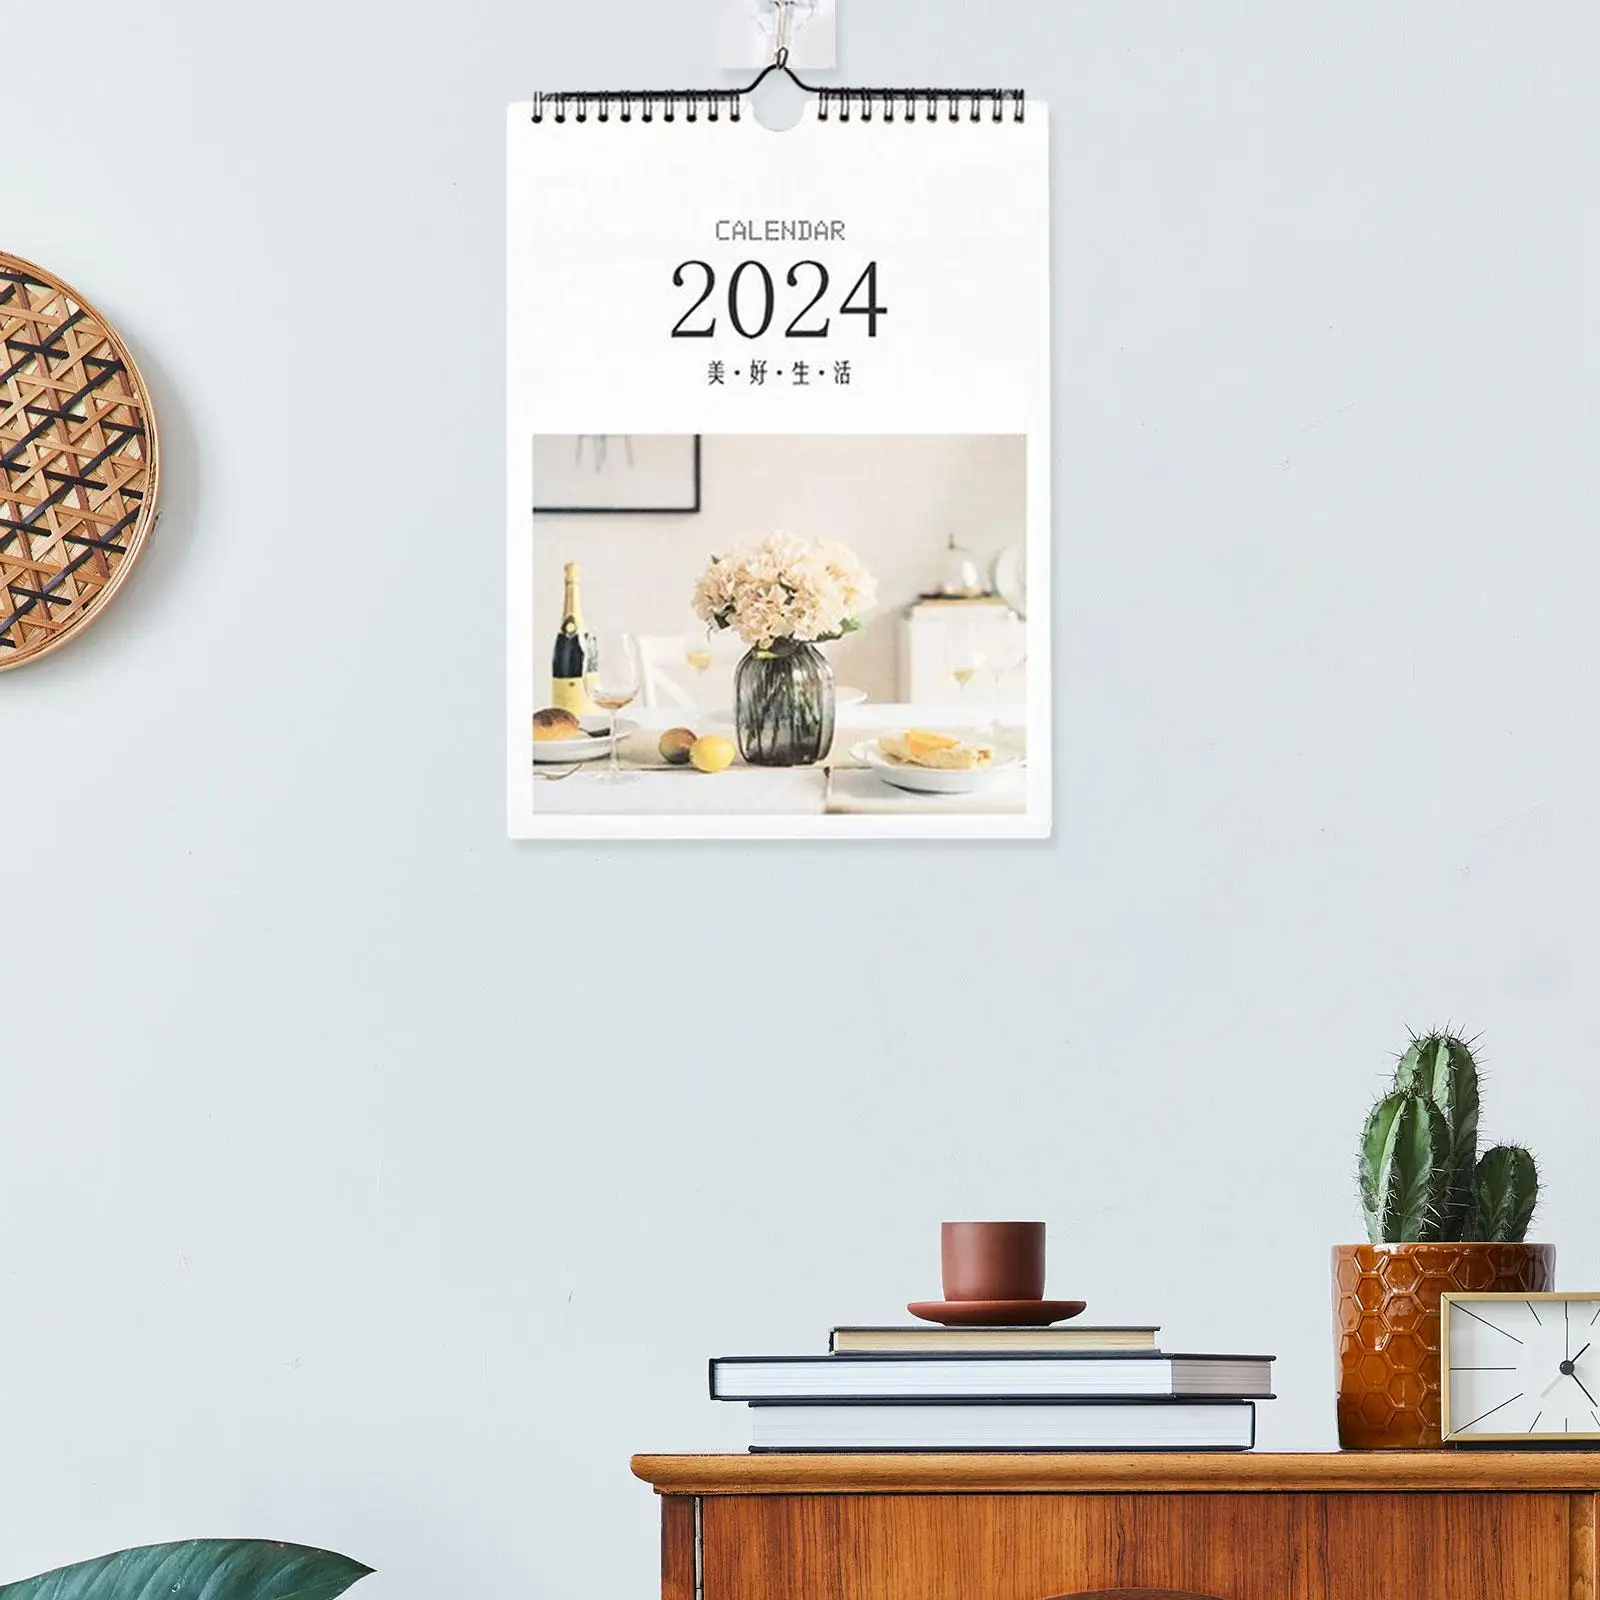 Coil Wall Calendar Monthly Calendar,Hanging Hook Sept 2023 - DEC 2024,2024 Calendar Schedule for New Year Office Home Bedroom